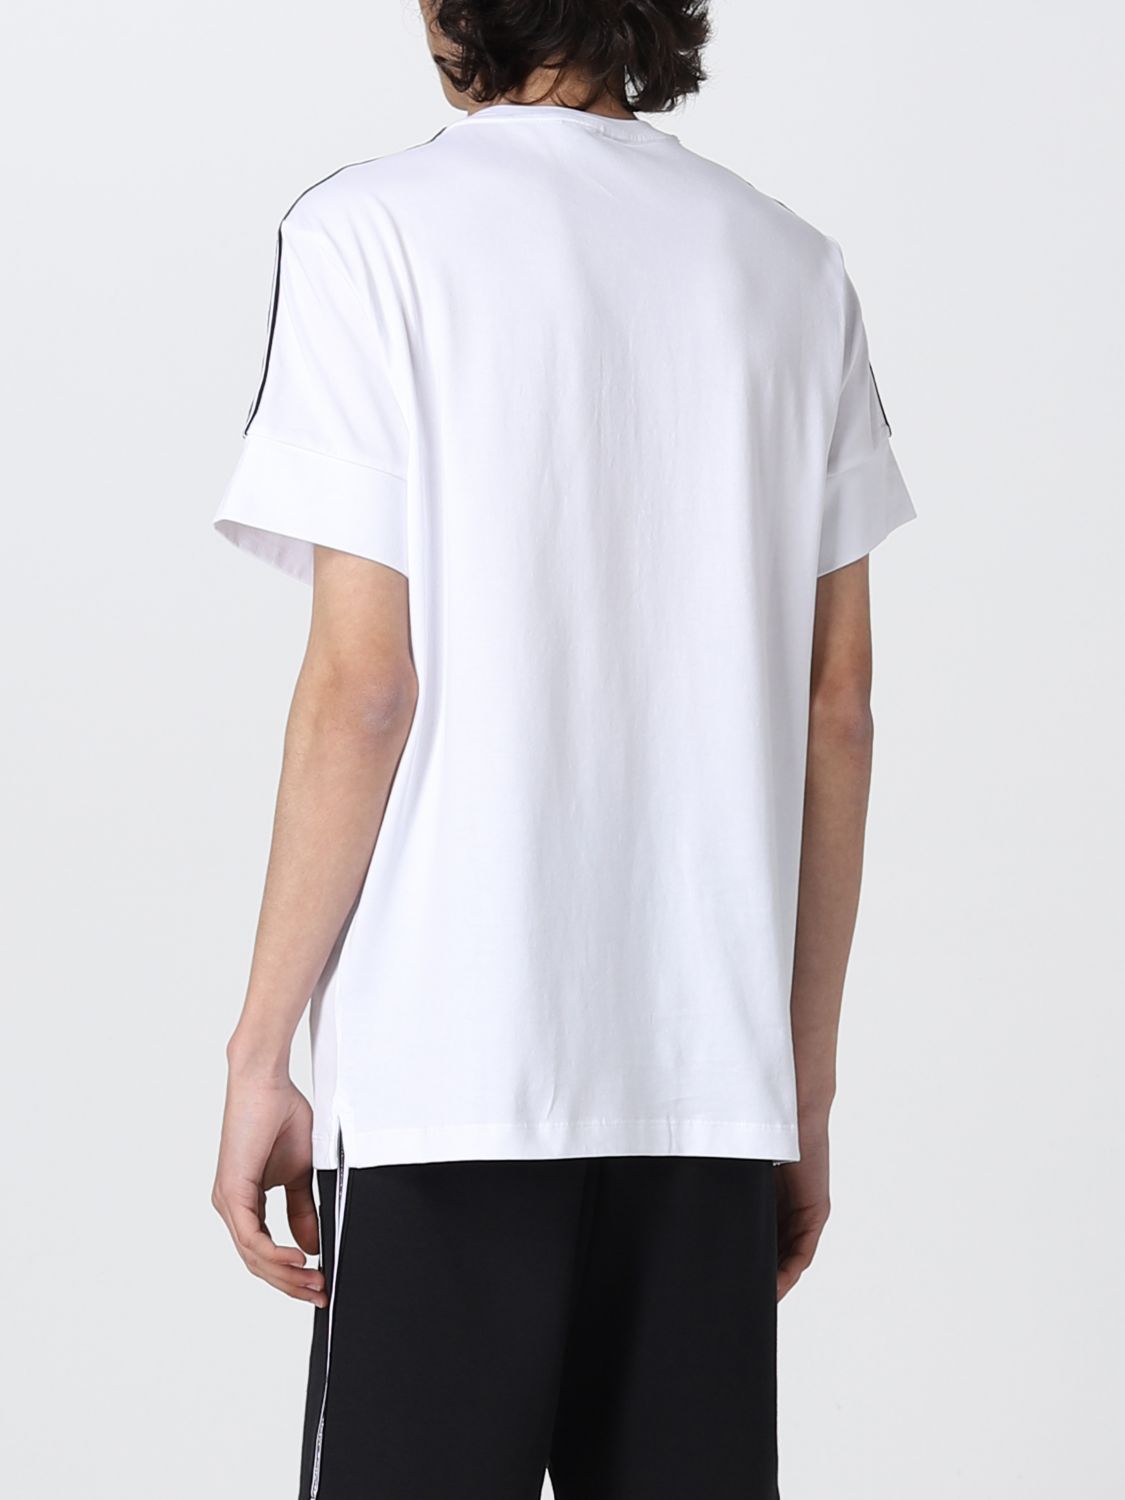 MICHAEL MICHAEL KORS: T-shirt men Michael Kors - White | T-Shirt ...